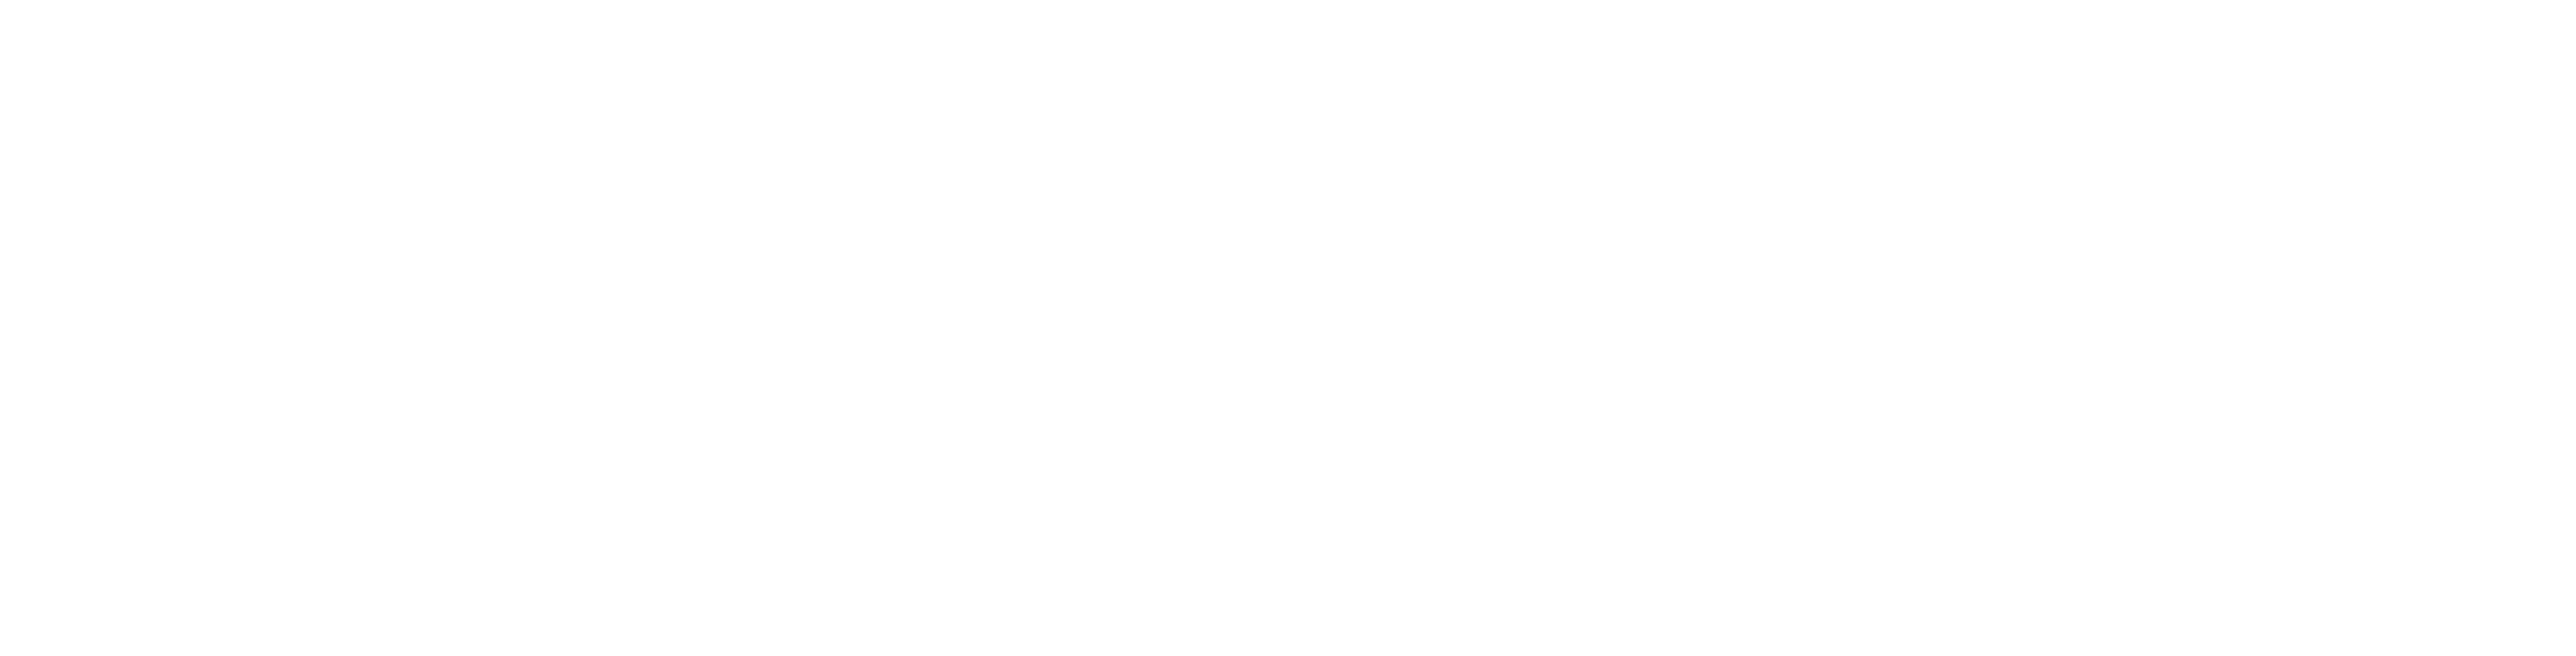 The Sunset Collection x CØMPASS 